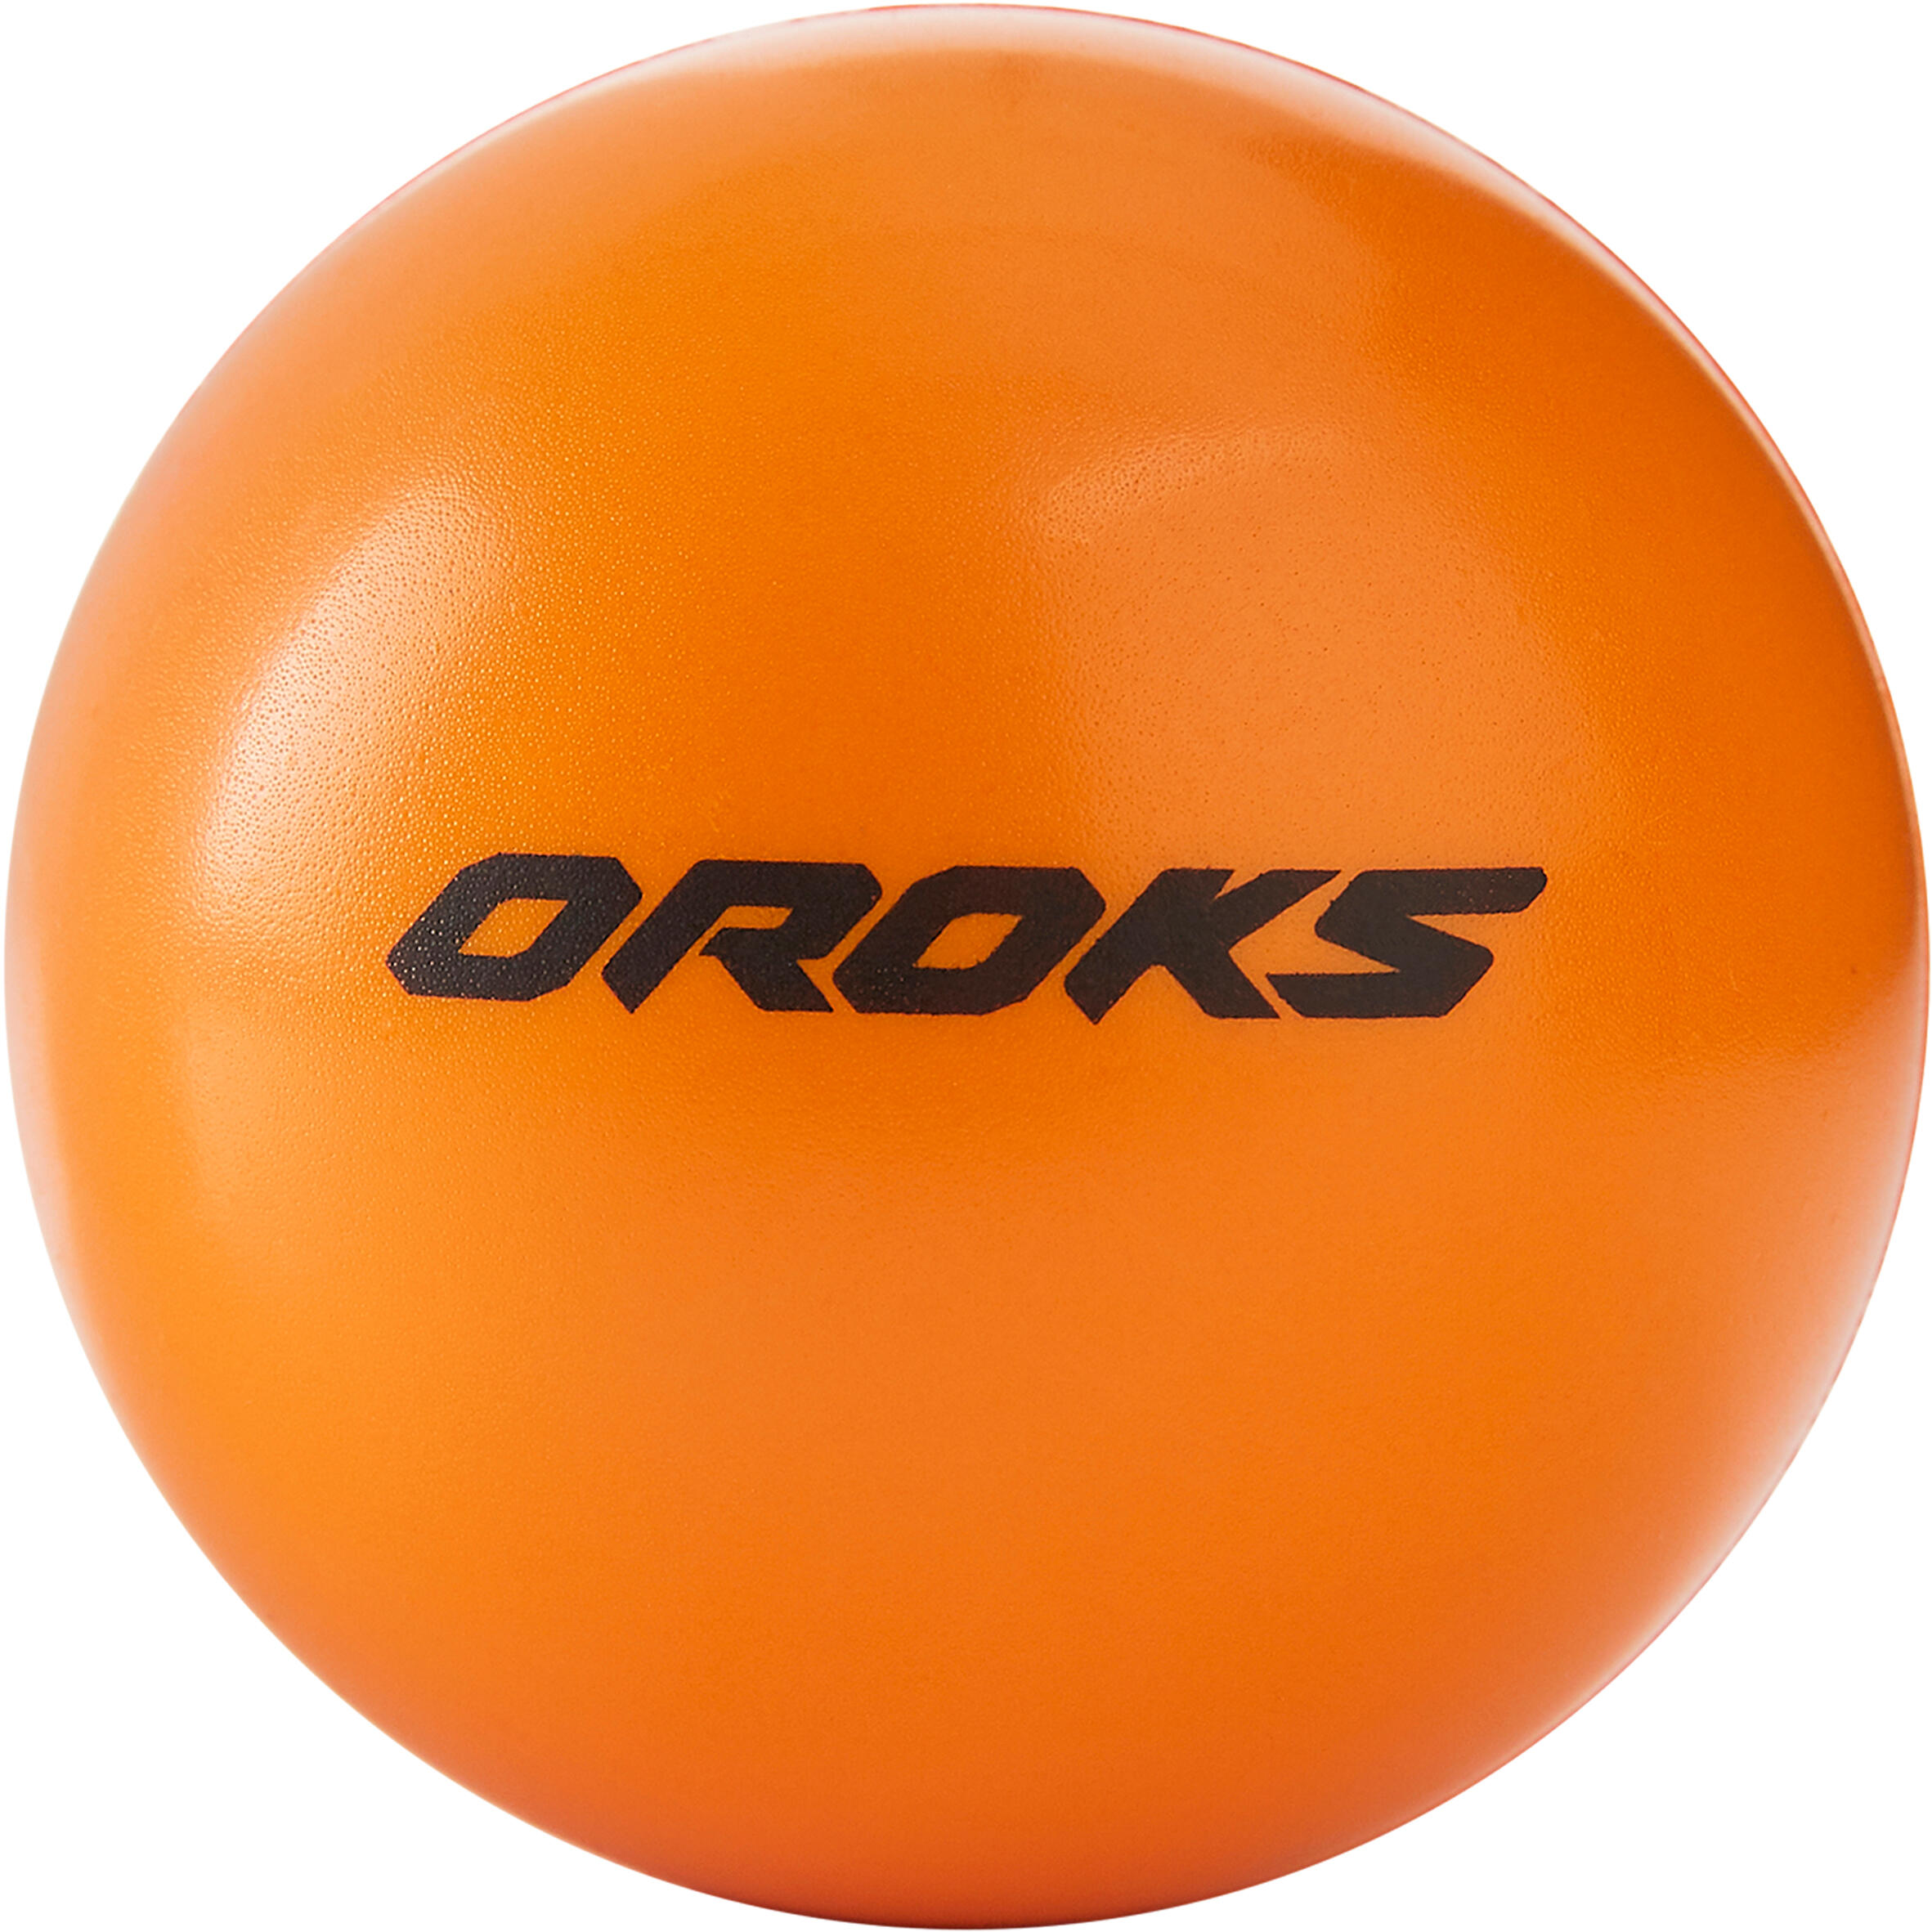 OROKS Foam Hockey Ball